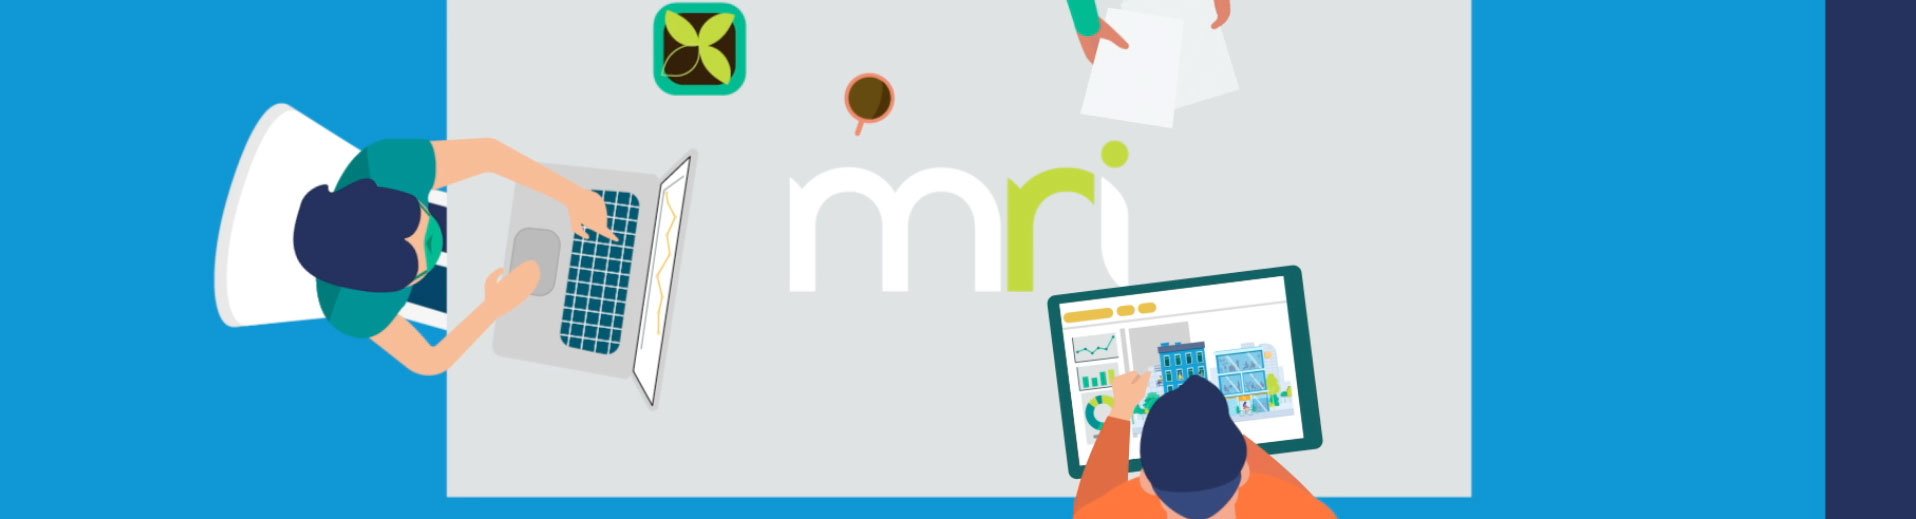 MRI Living & MRI @Work - Product Animations | Elevation — a creative company